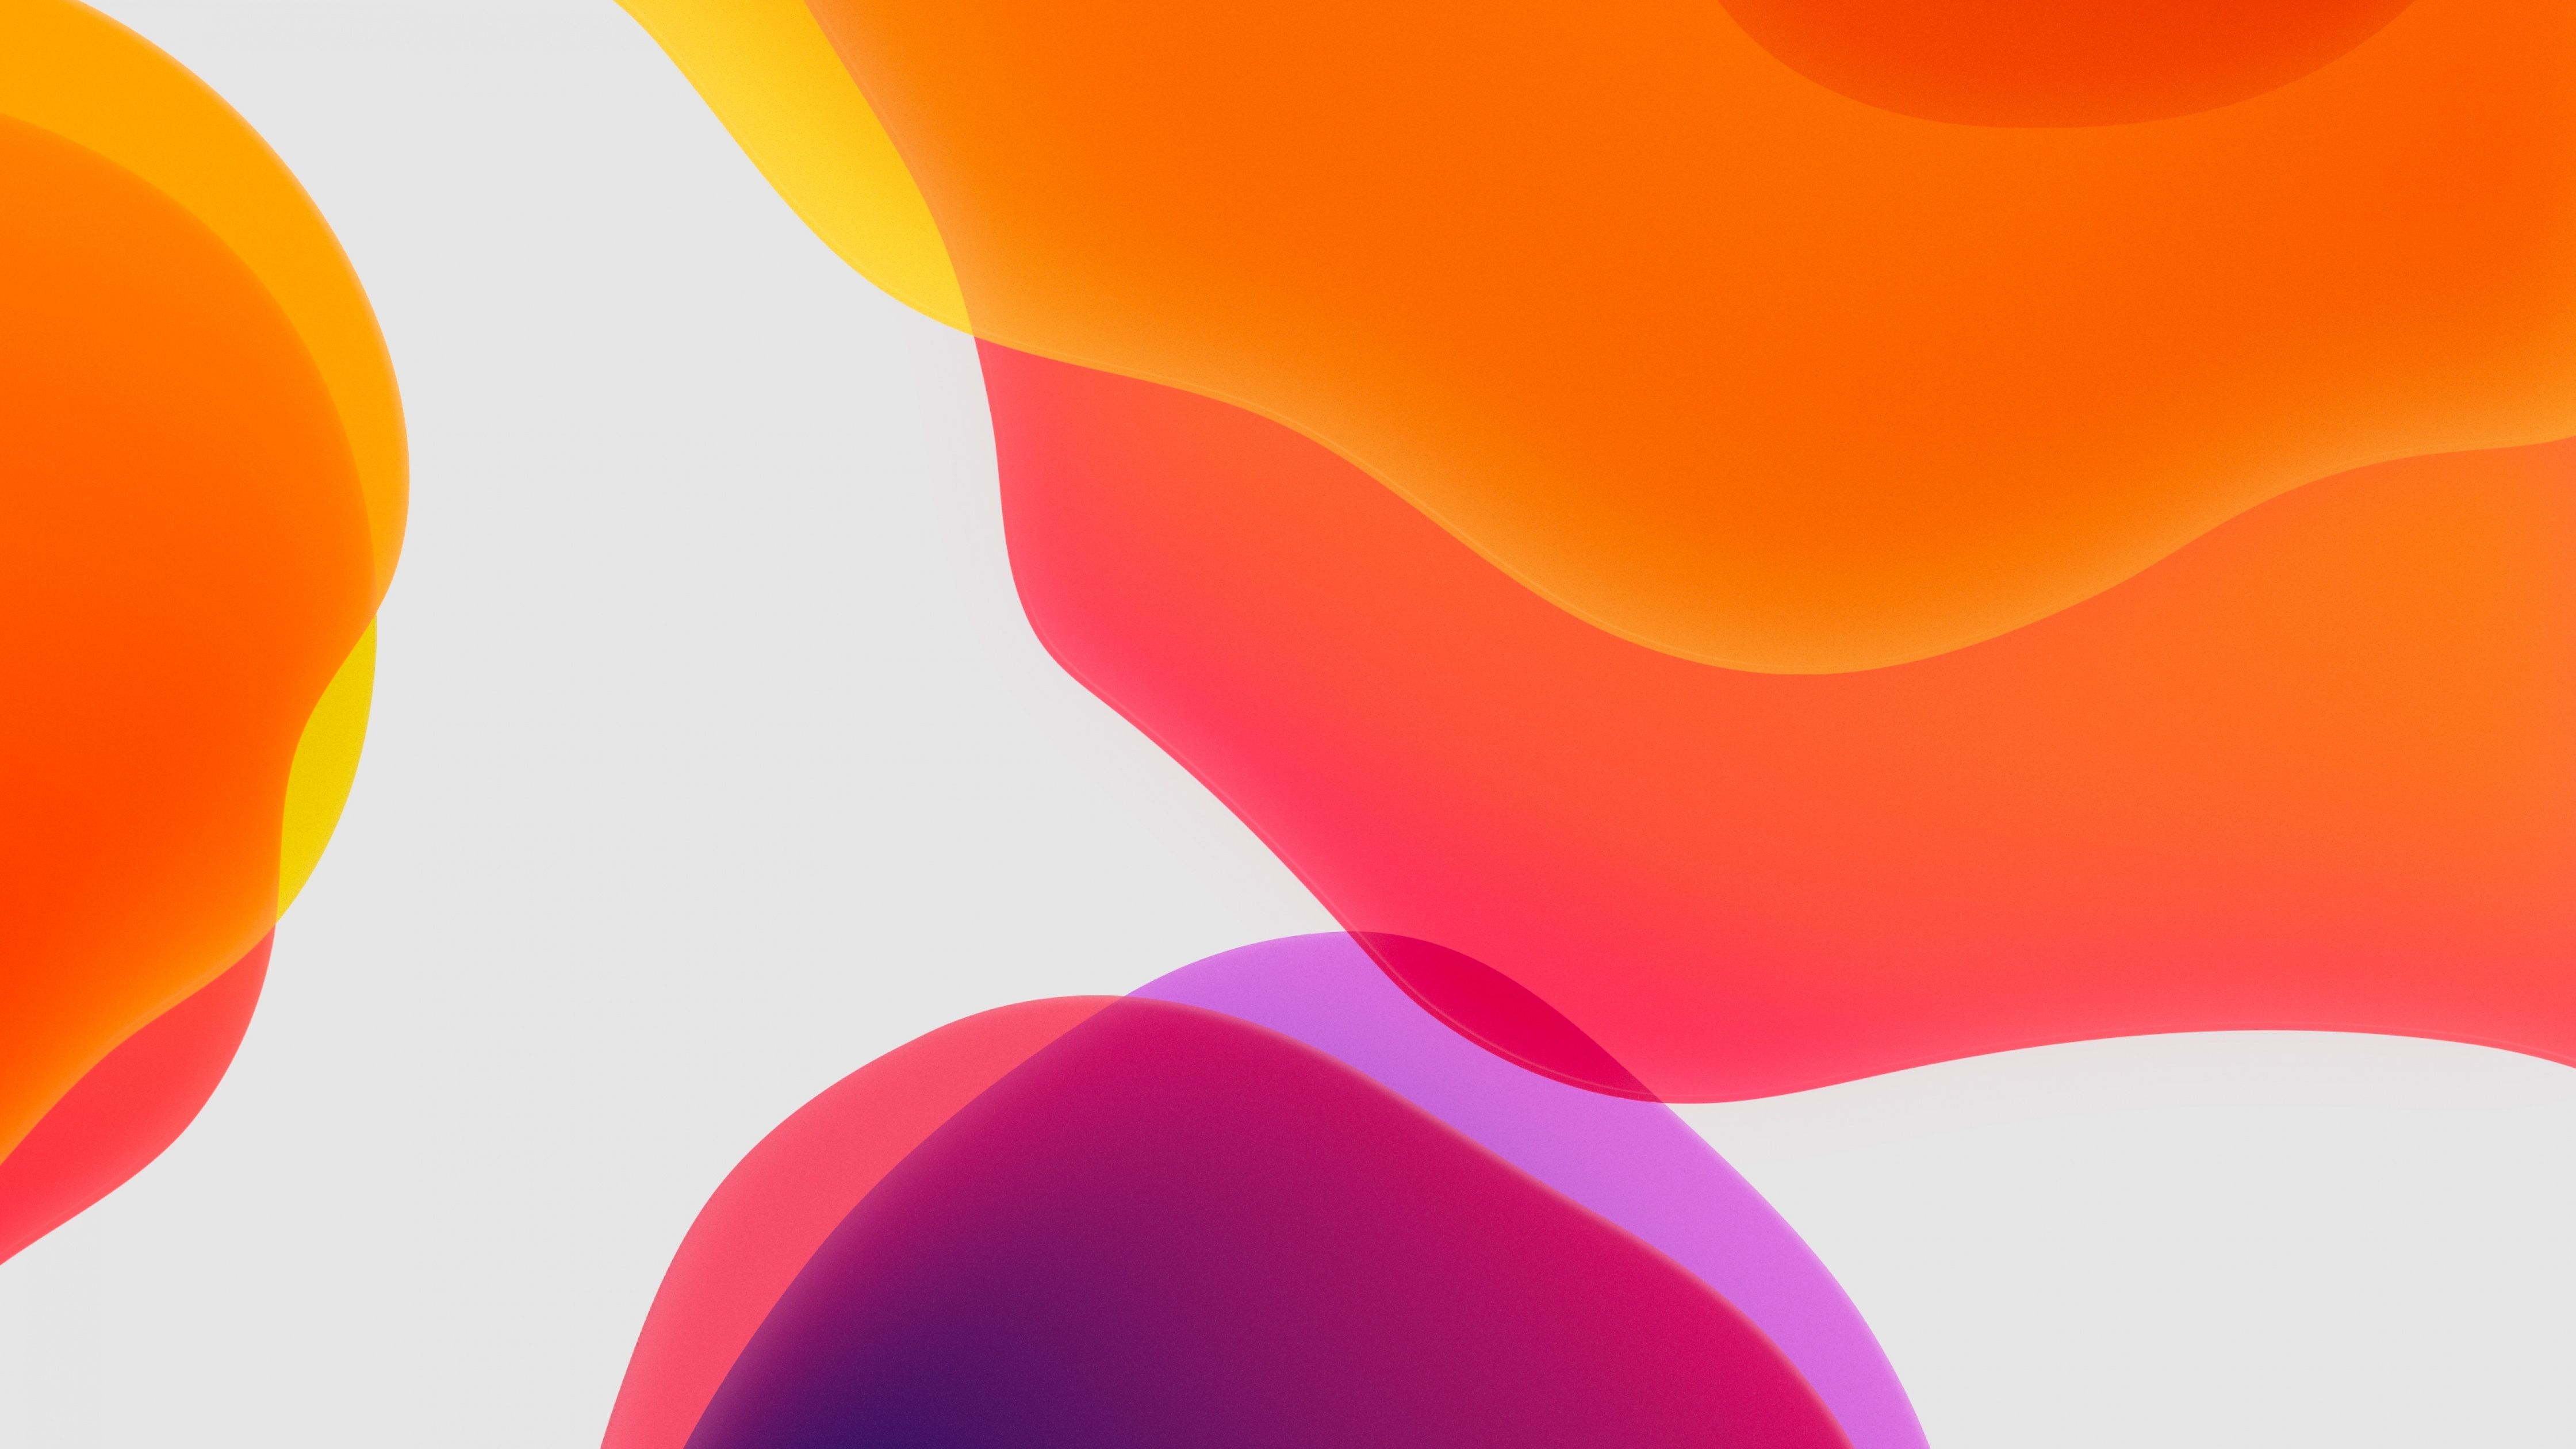 Download the iOS 13 wallpaper for iPhone and iPad - Orange, dark orange